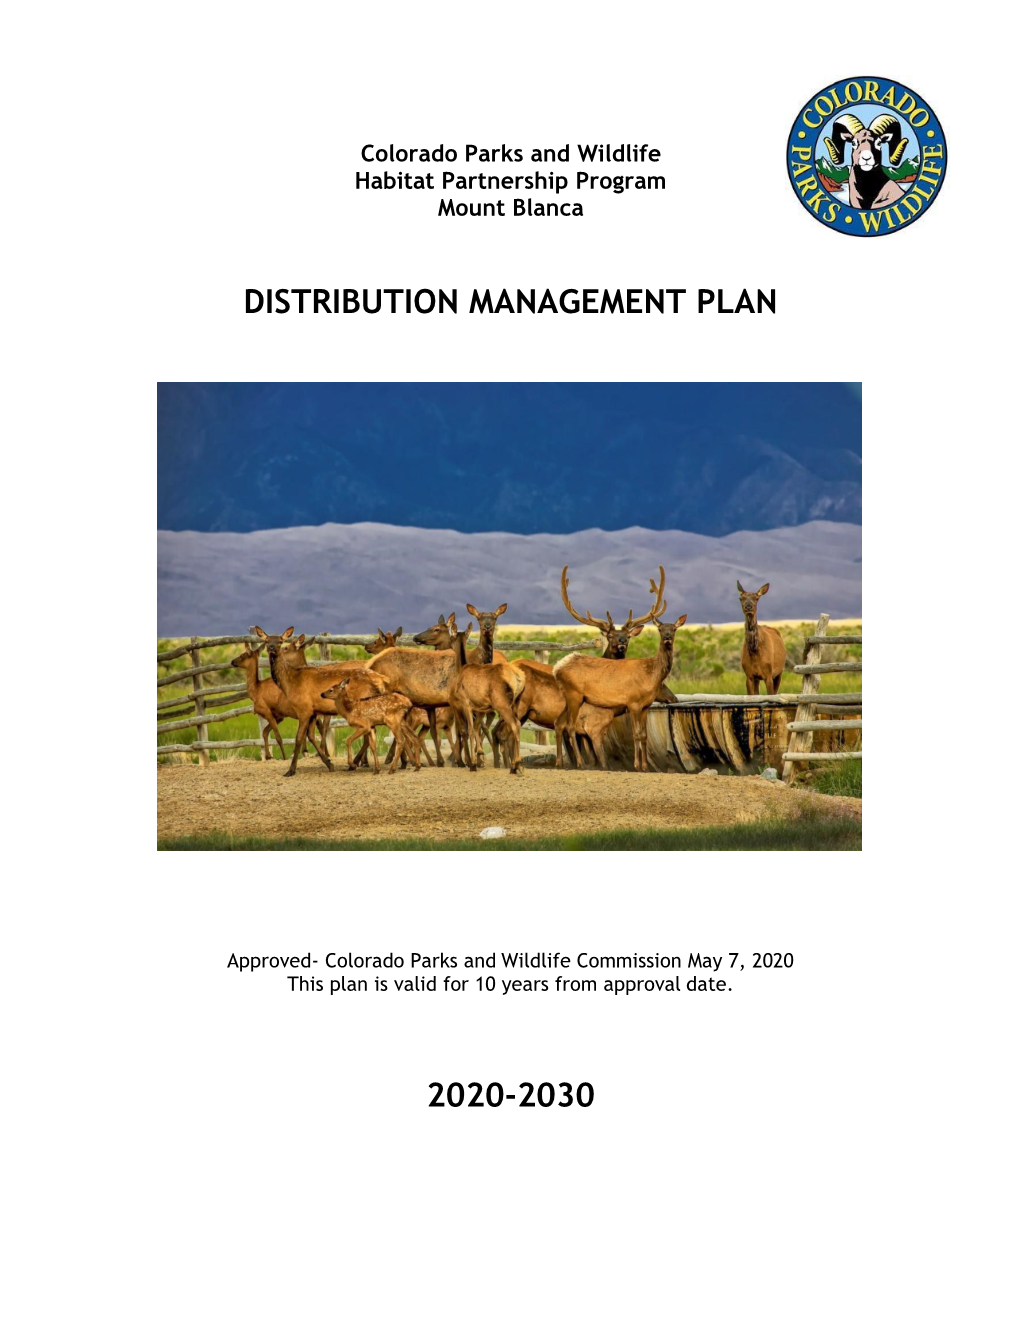 Distribution Management Plan 2020-2030